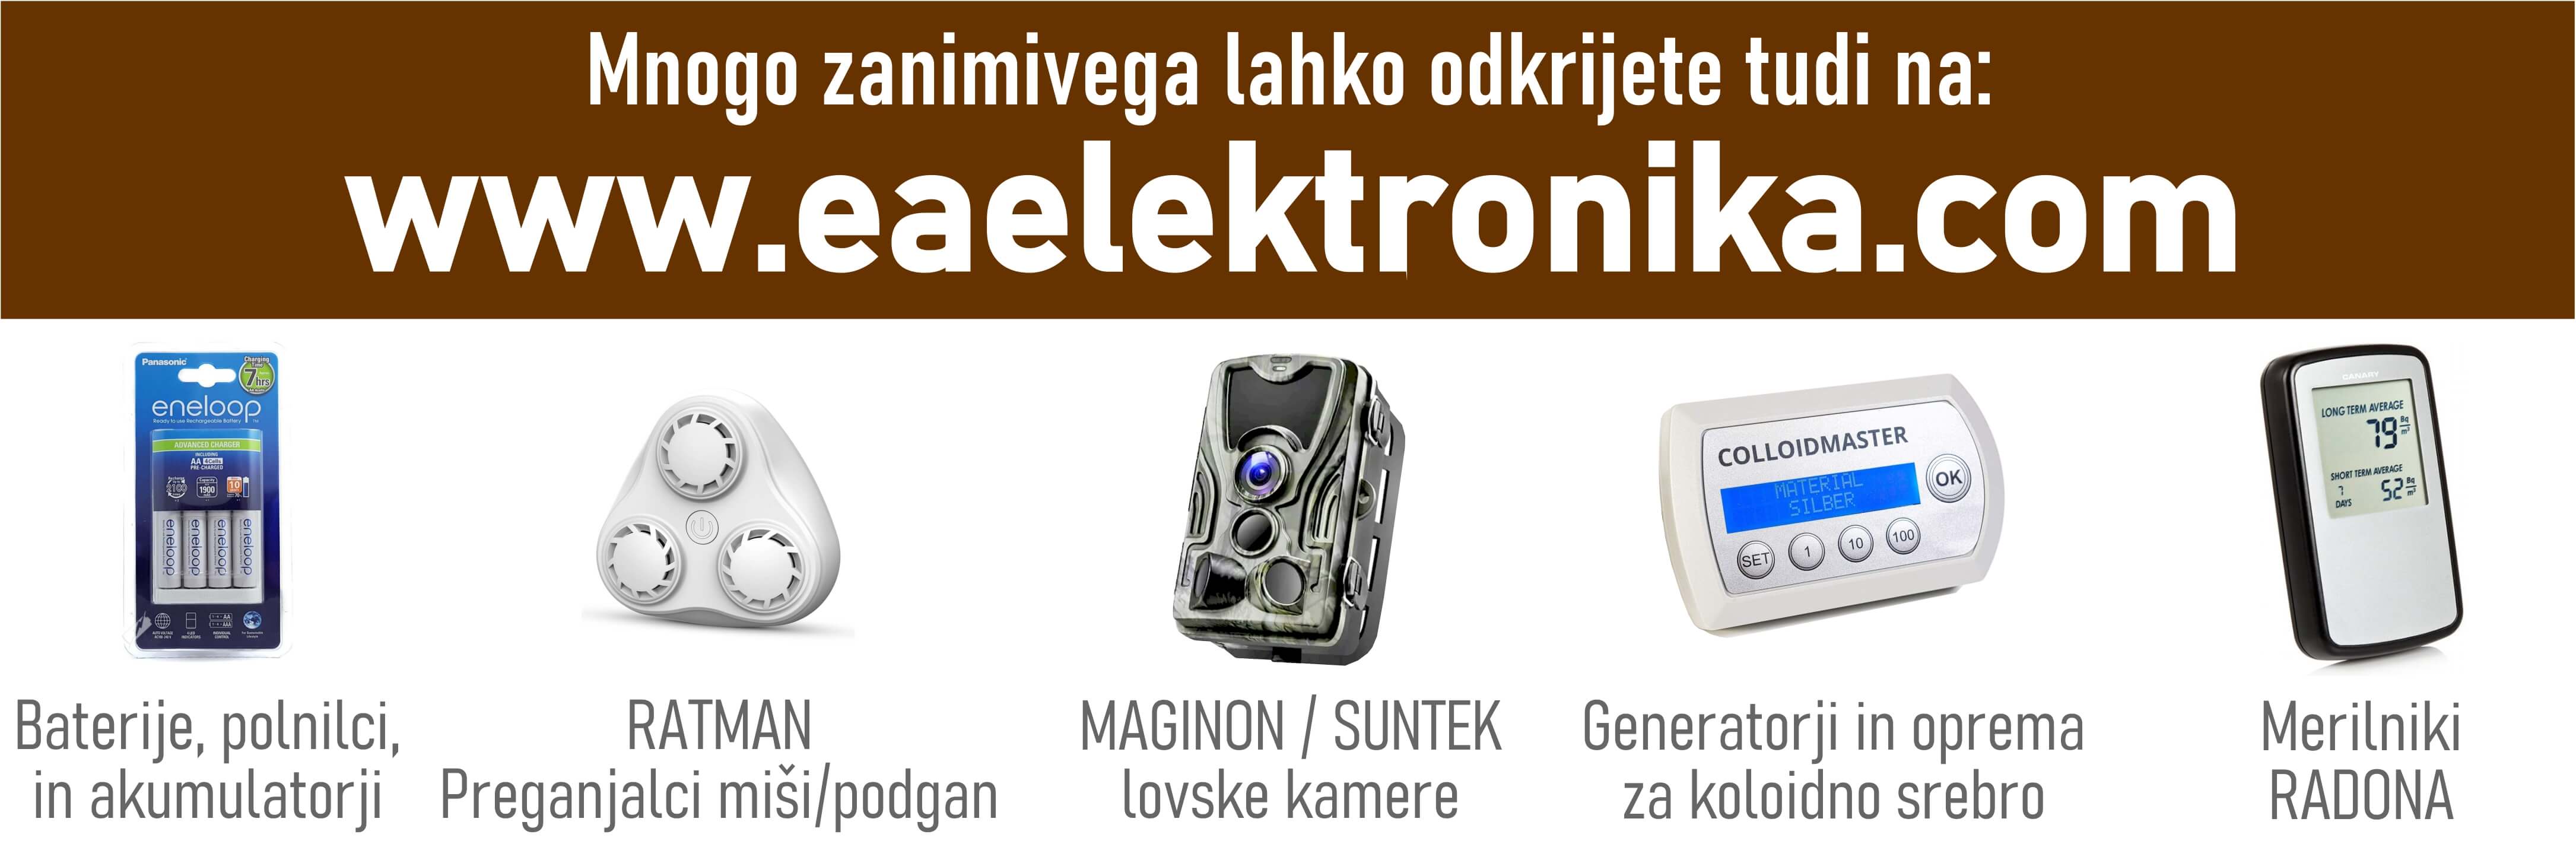 www.eaelektronika.com